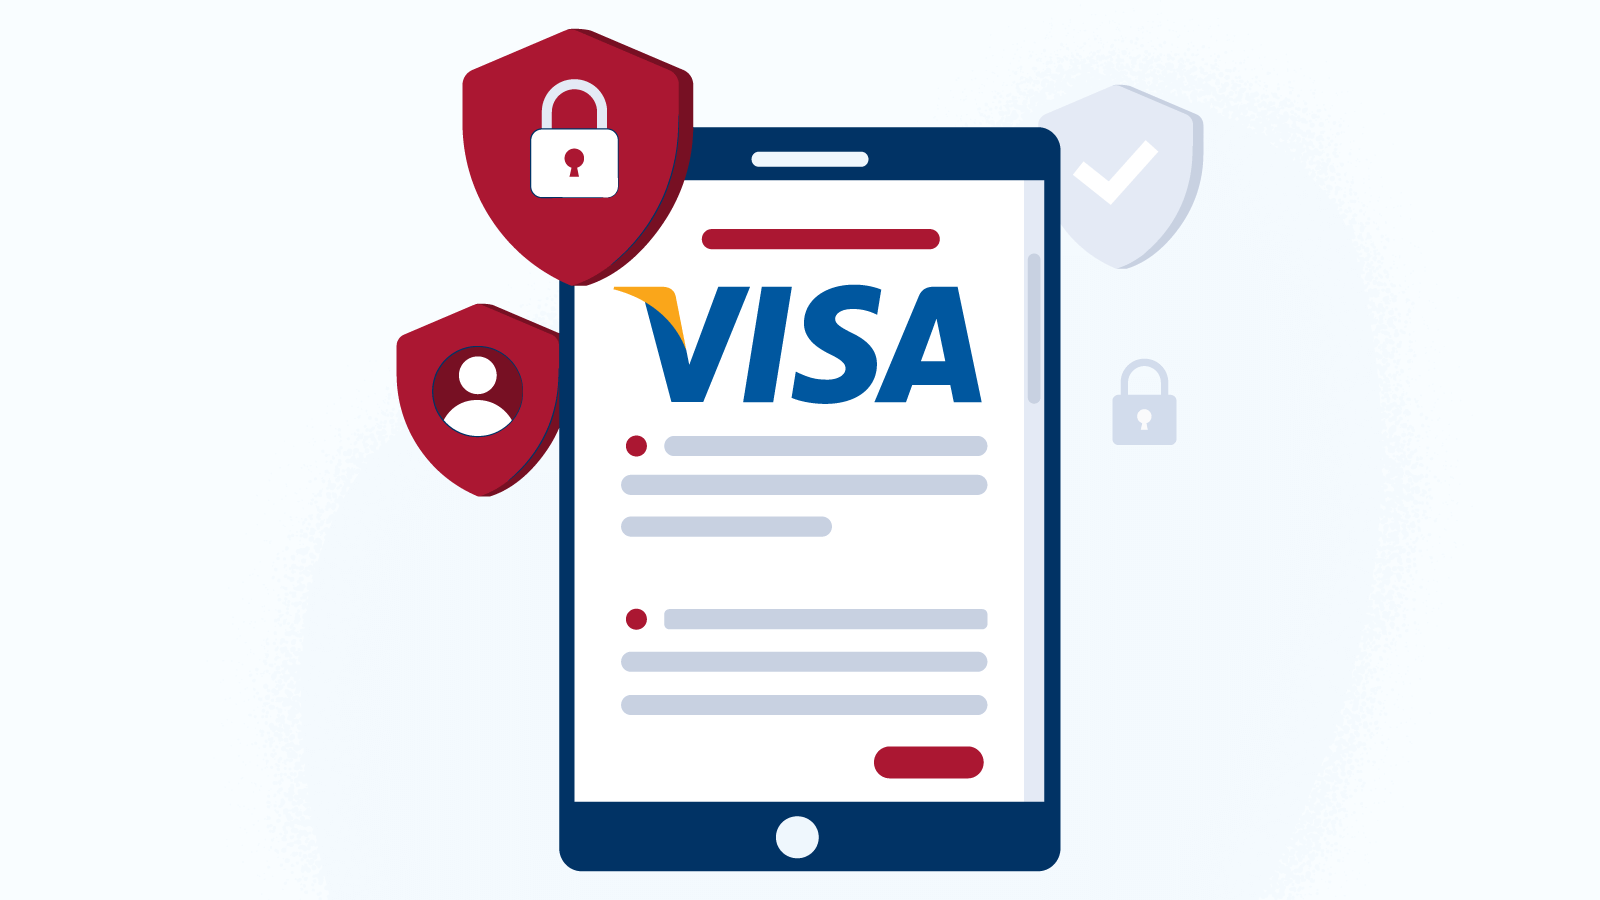 Visa Security Features